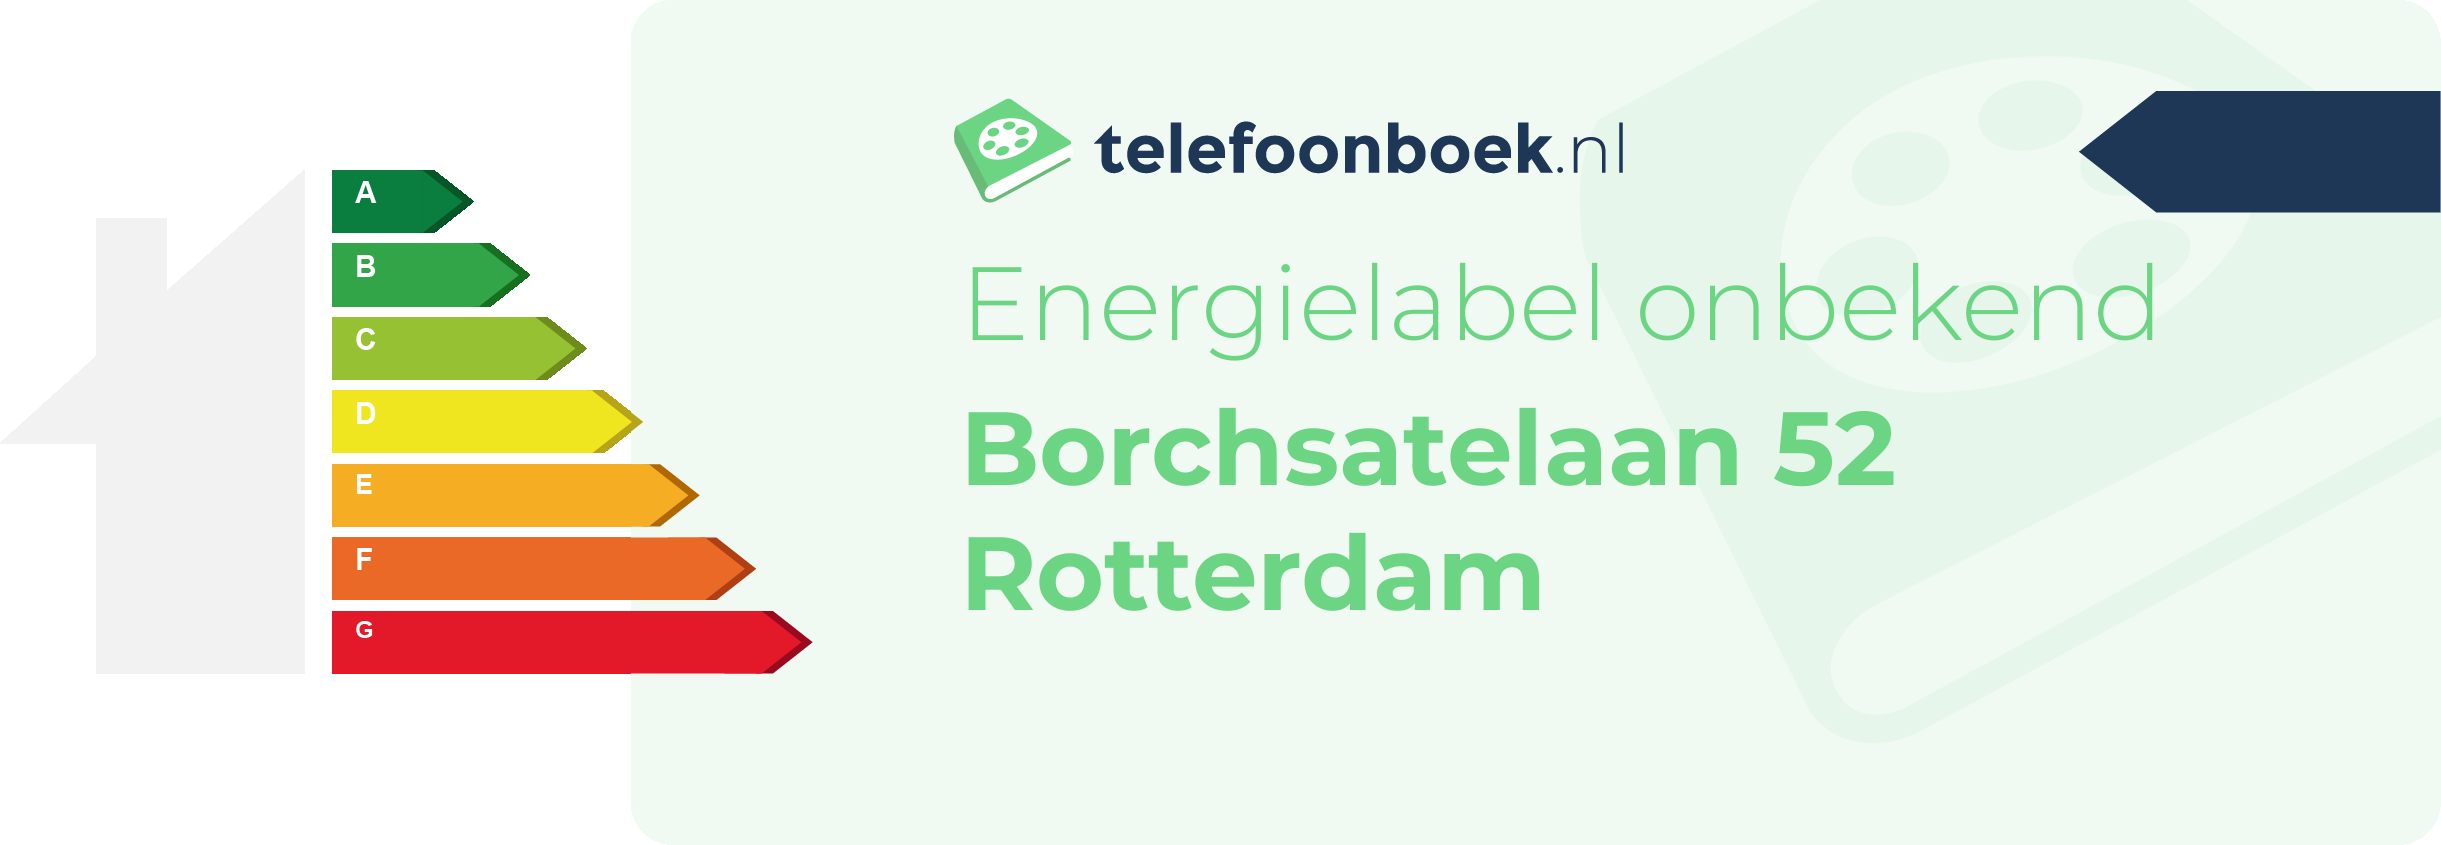 Energielabel Borchsatelaan 52 Rotterdam